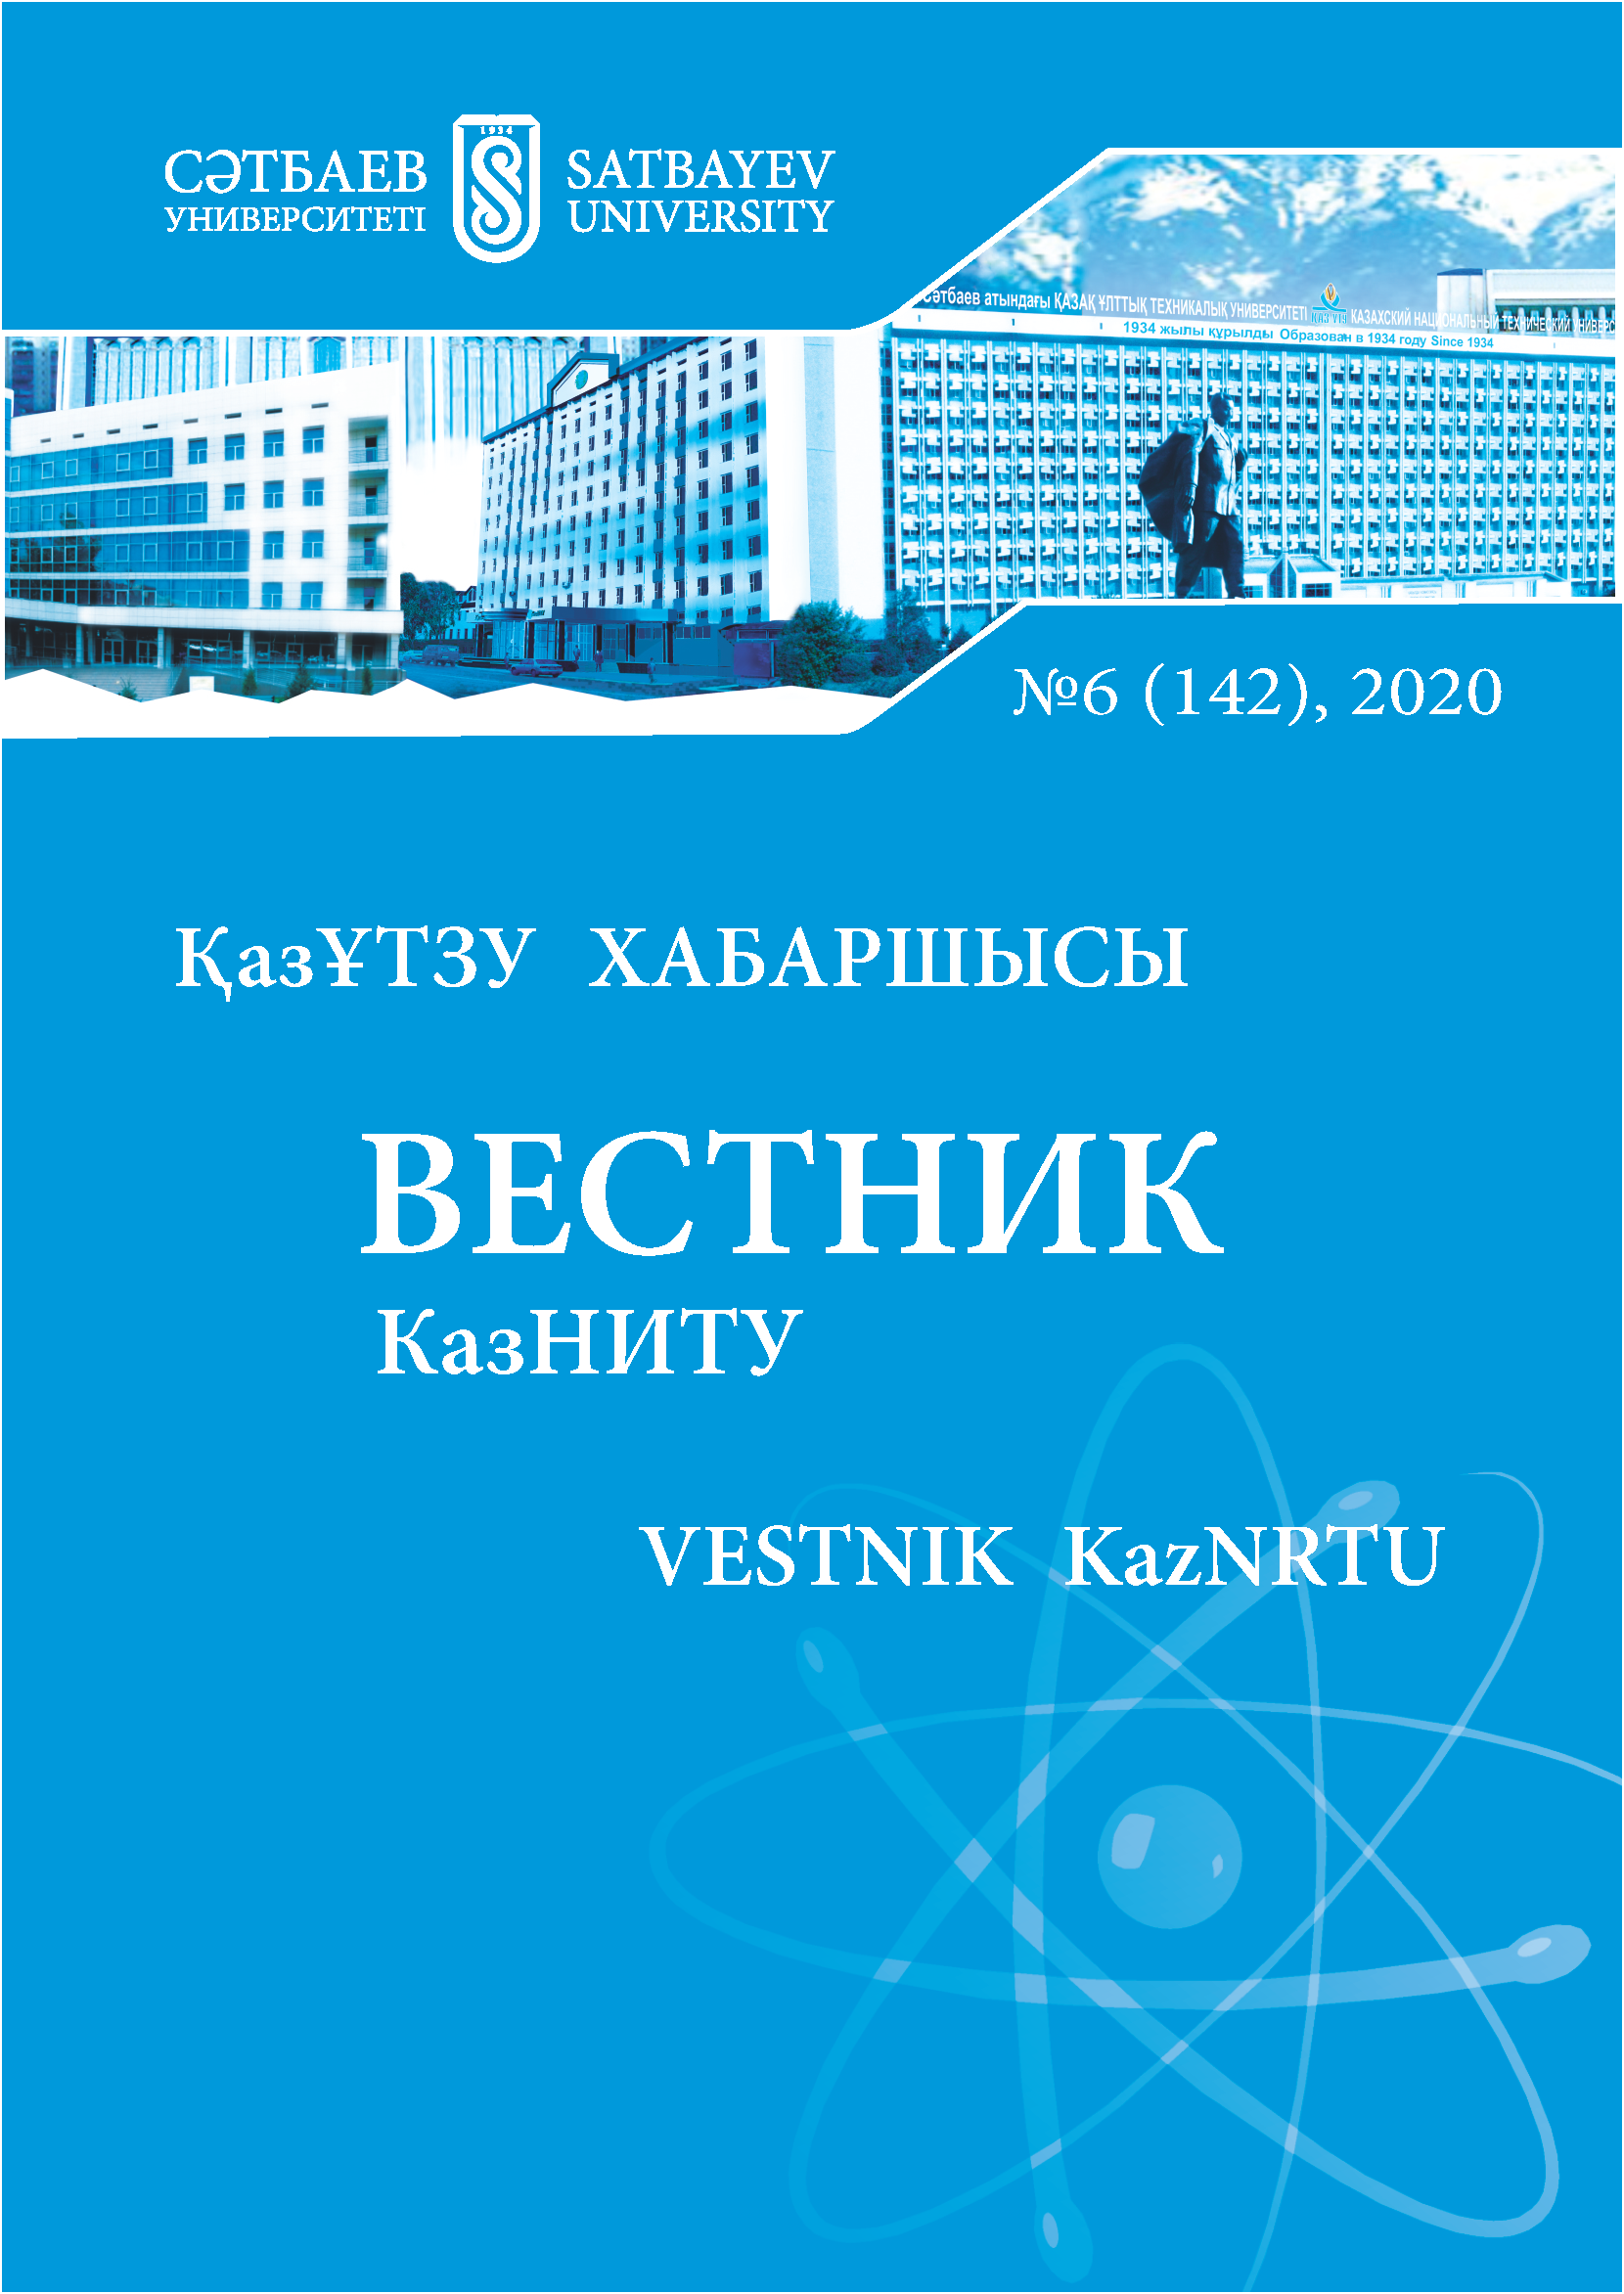 					View Vol. 142 No. 6 (2020): Vestnik KazNRTU
				